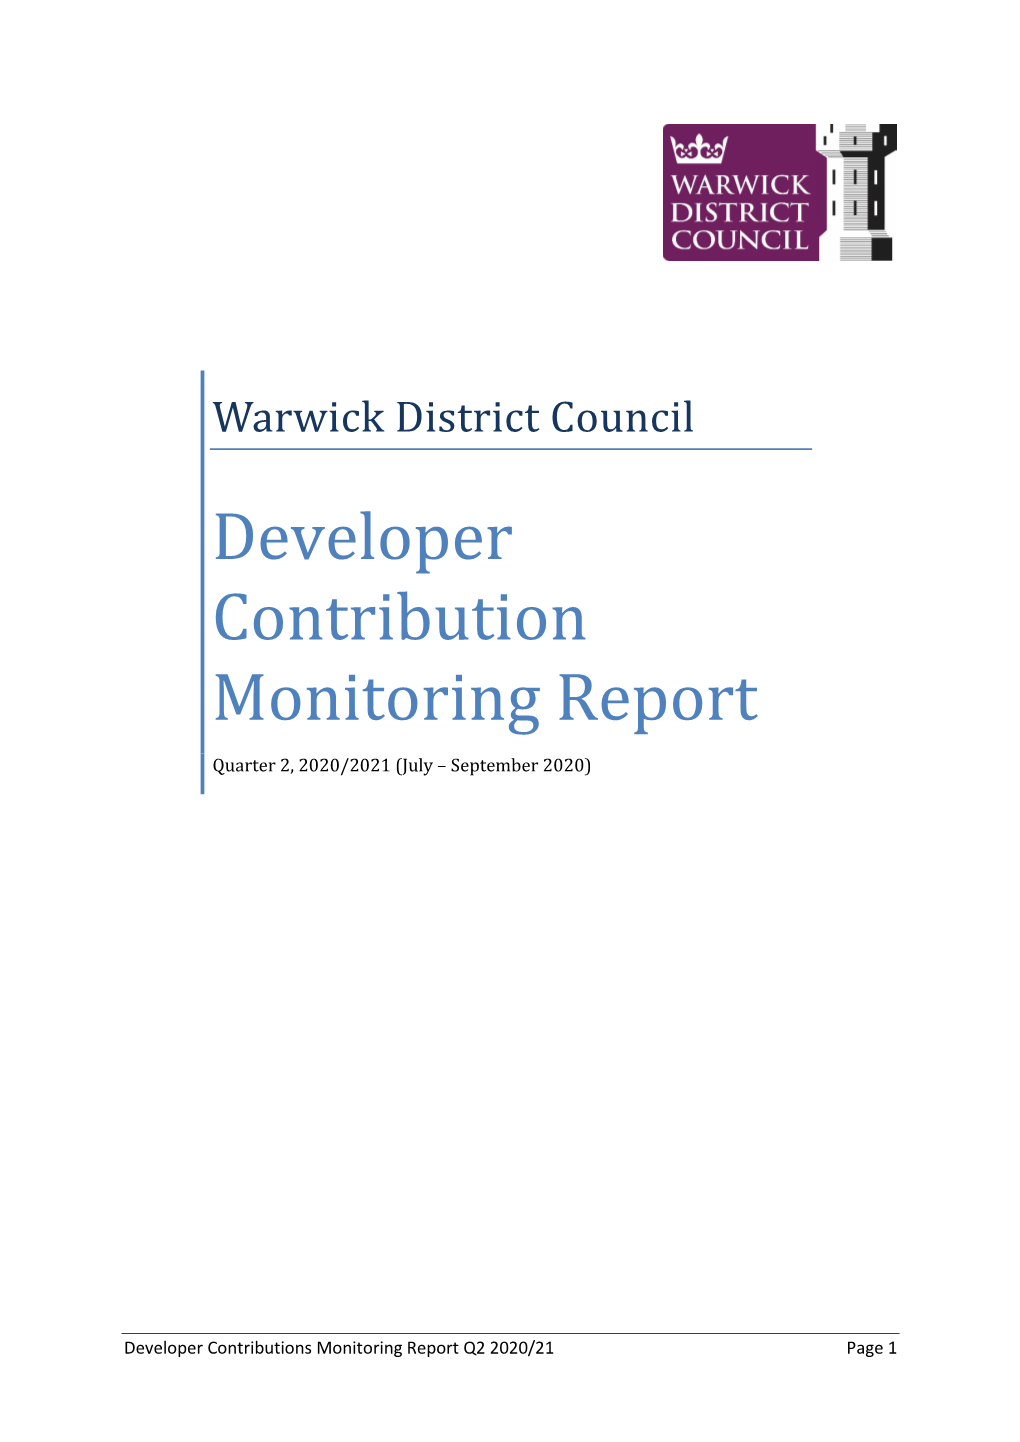 2020-21 Q2 Developer Contribution Monitoring Report